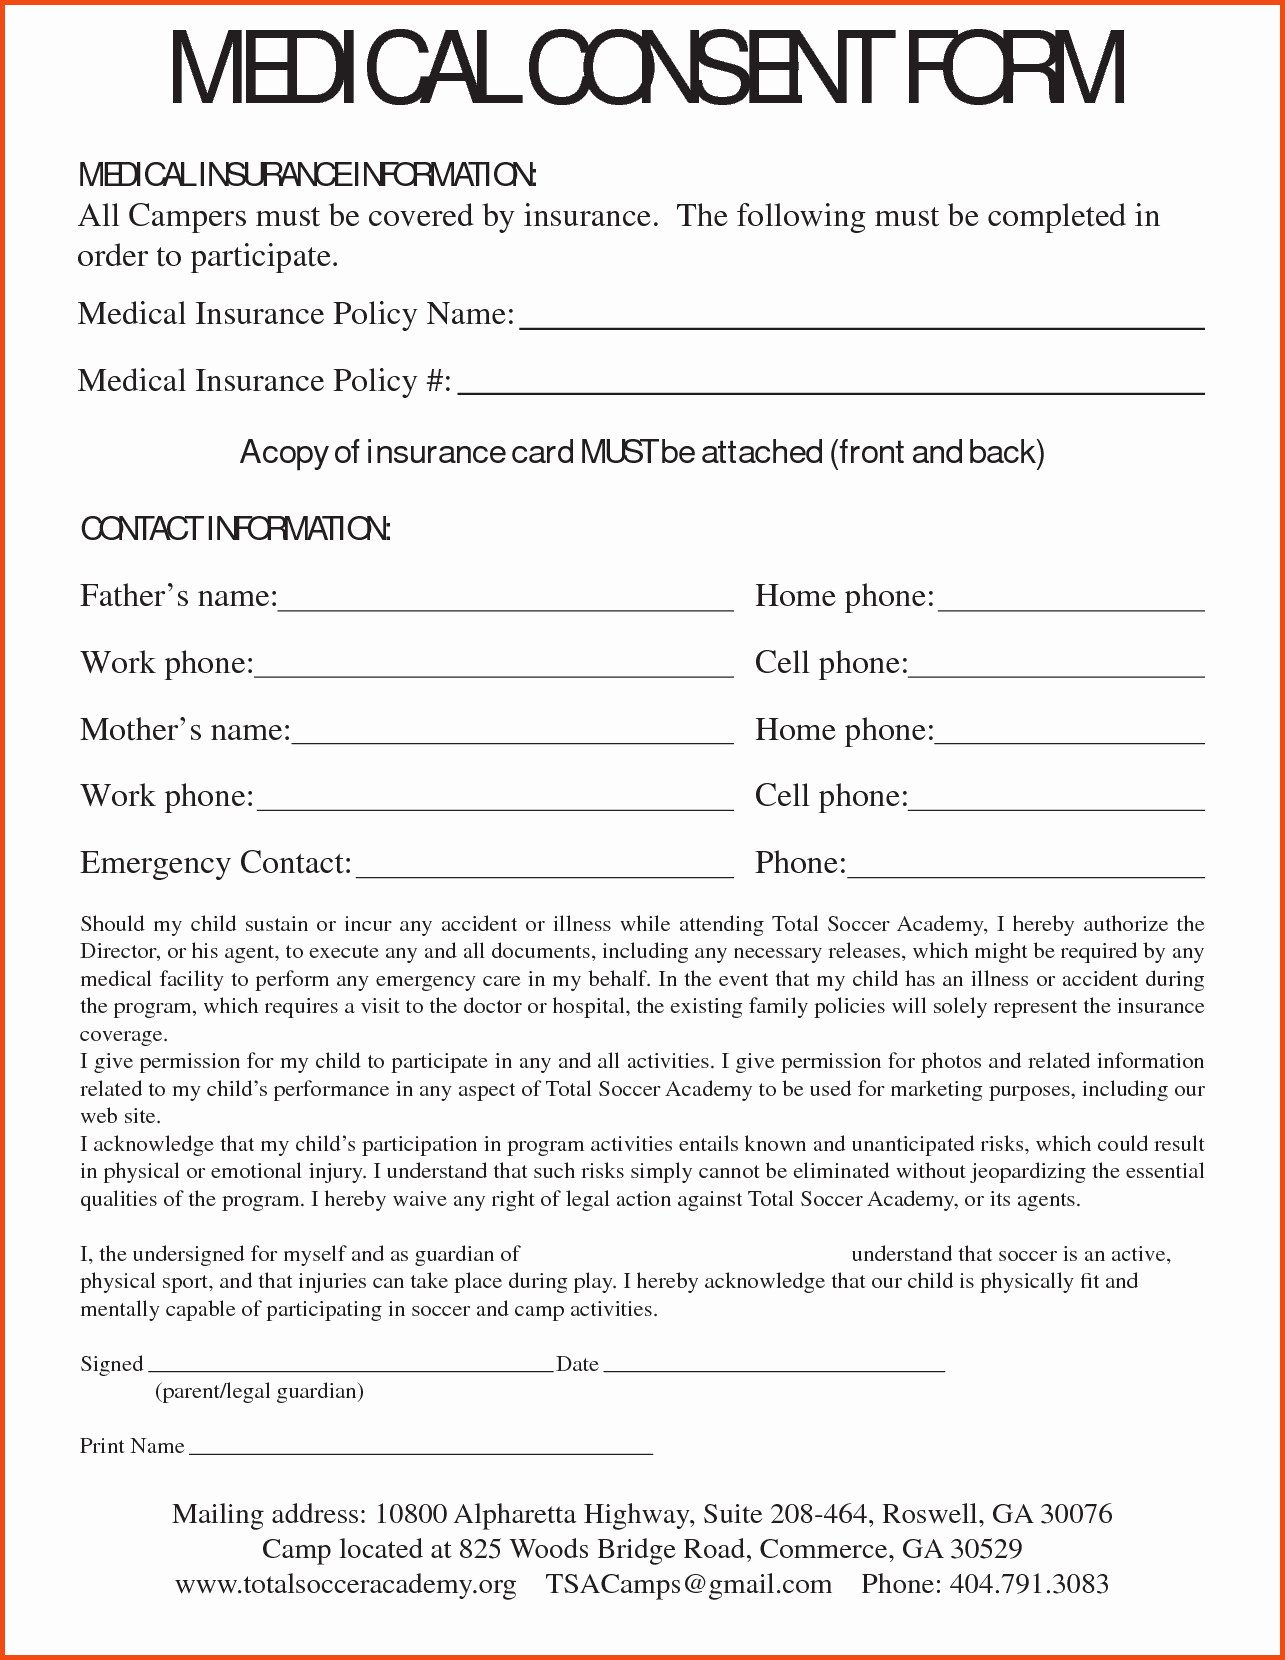 Child Medical Consent form Template Elegant Medical Consent Letter Template Collection